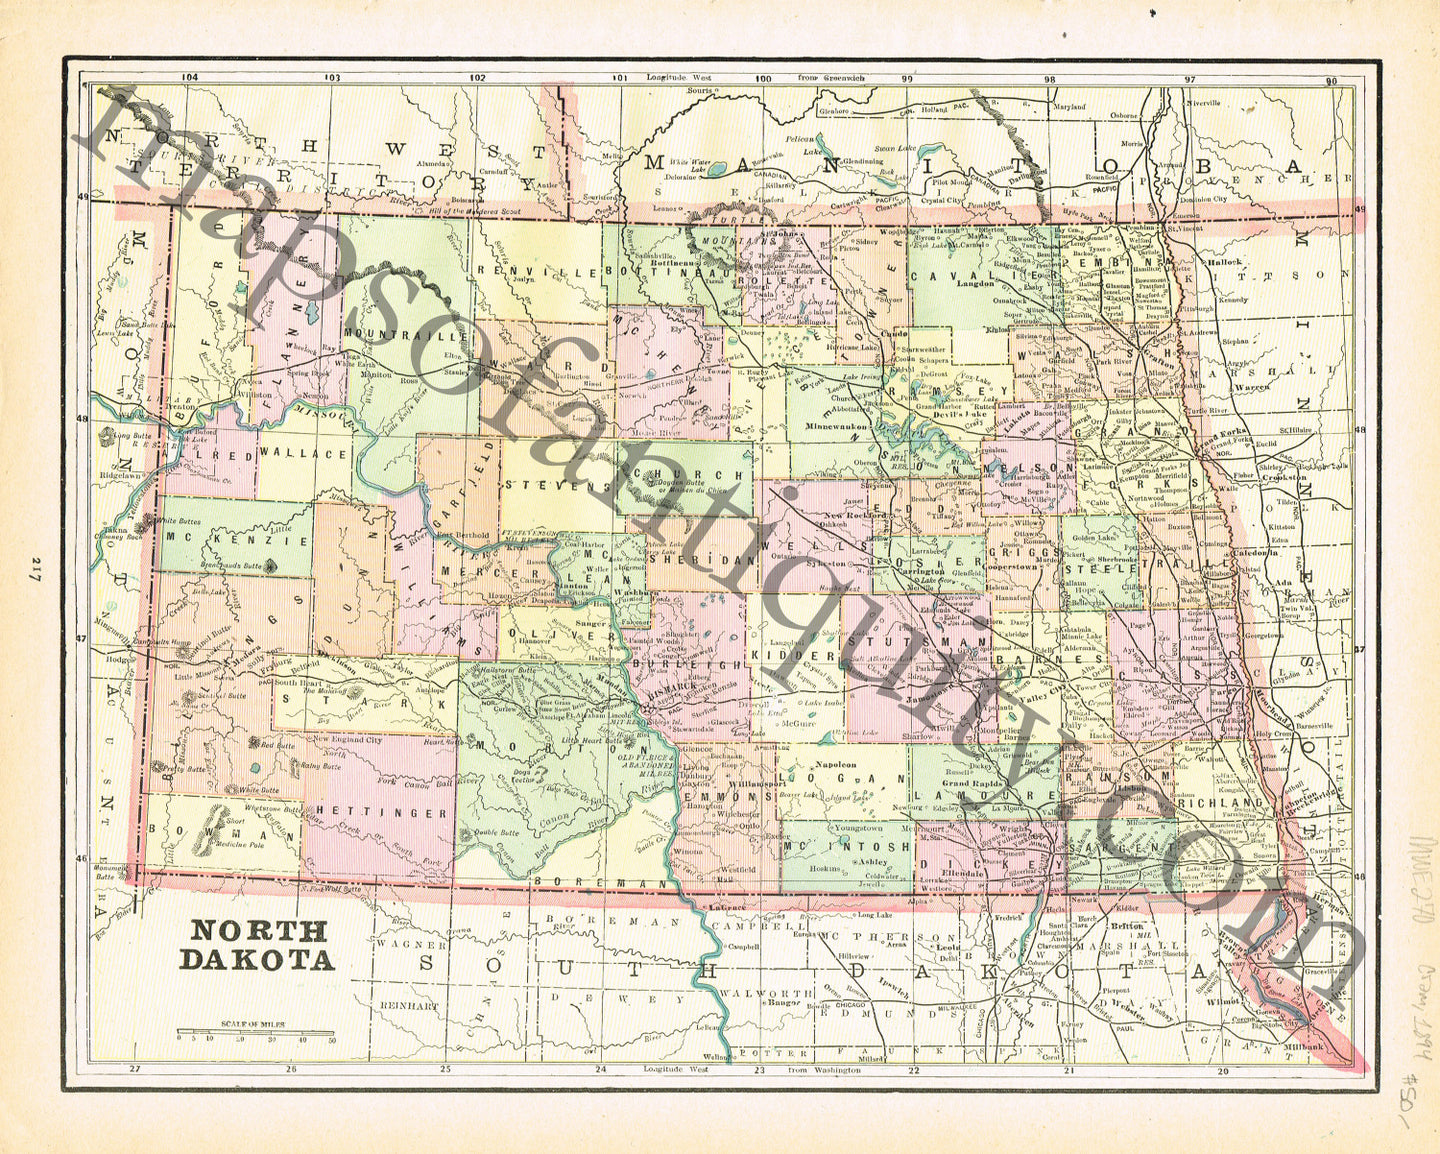 Antique-Printed-Color-Map-North-Dakota-verso:-South-Dakota-United-States-Midwest-1894-Cram-Maps-Of-Antiquity